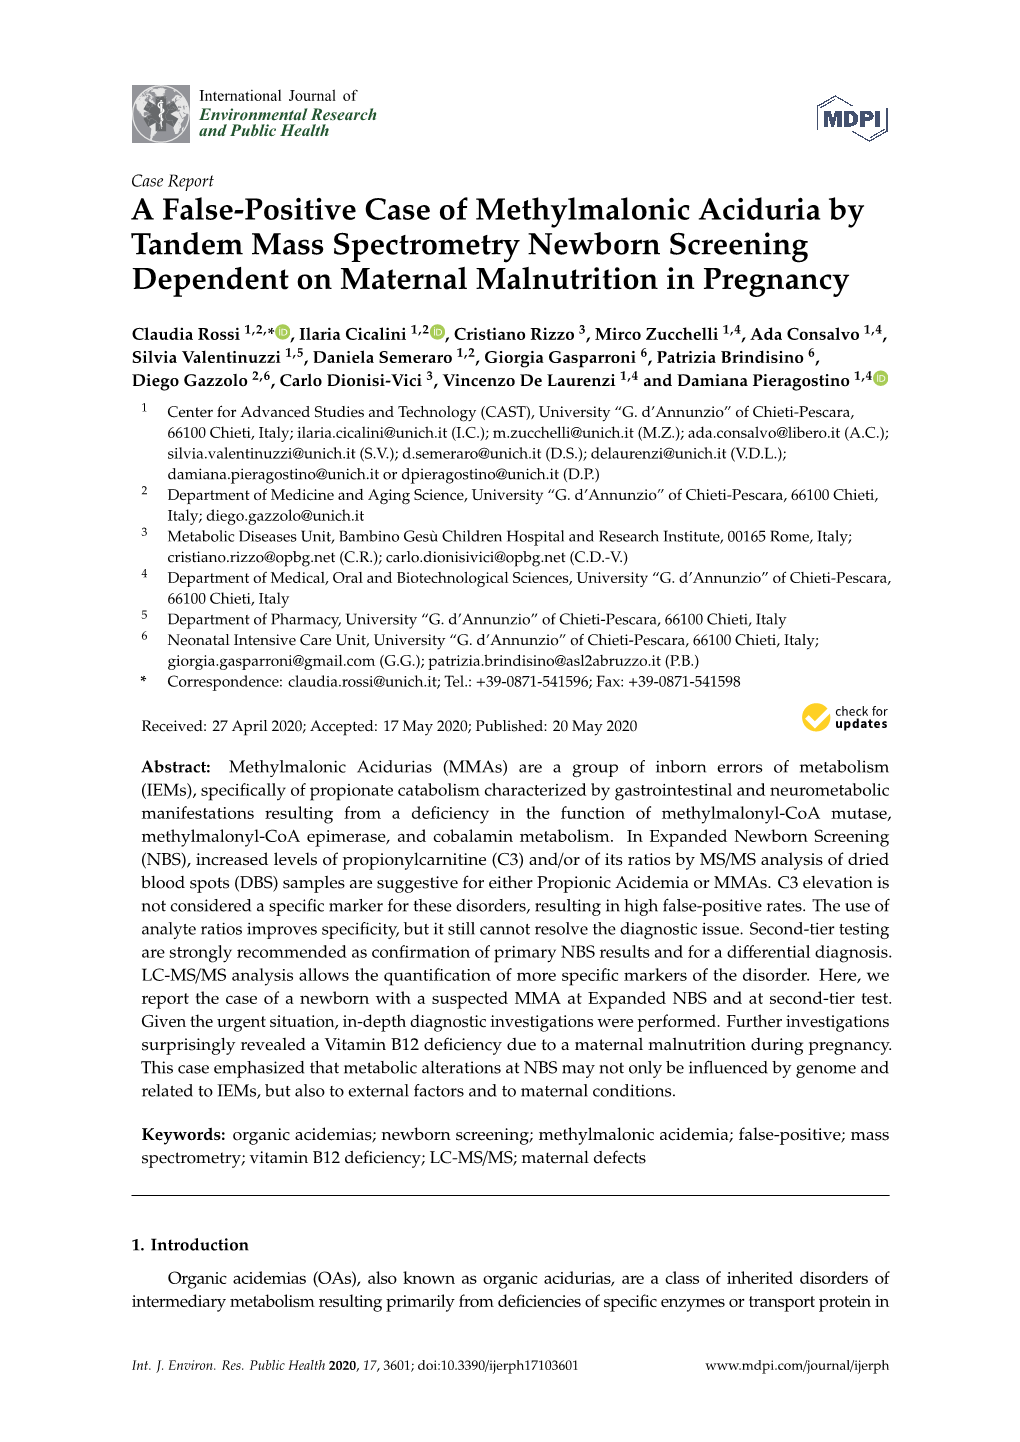 A False-Positive Case of Methylmalonic Aciduria by Tandem Mass Spectrometry Newborn Screening Dependent on Maternal Malnutrition in Pregnancy